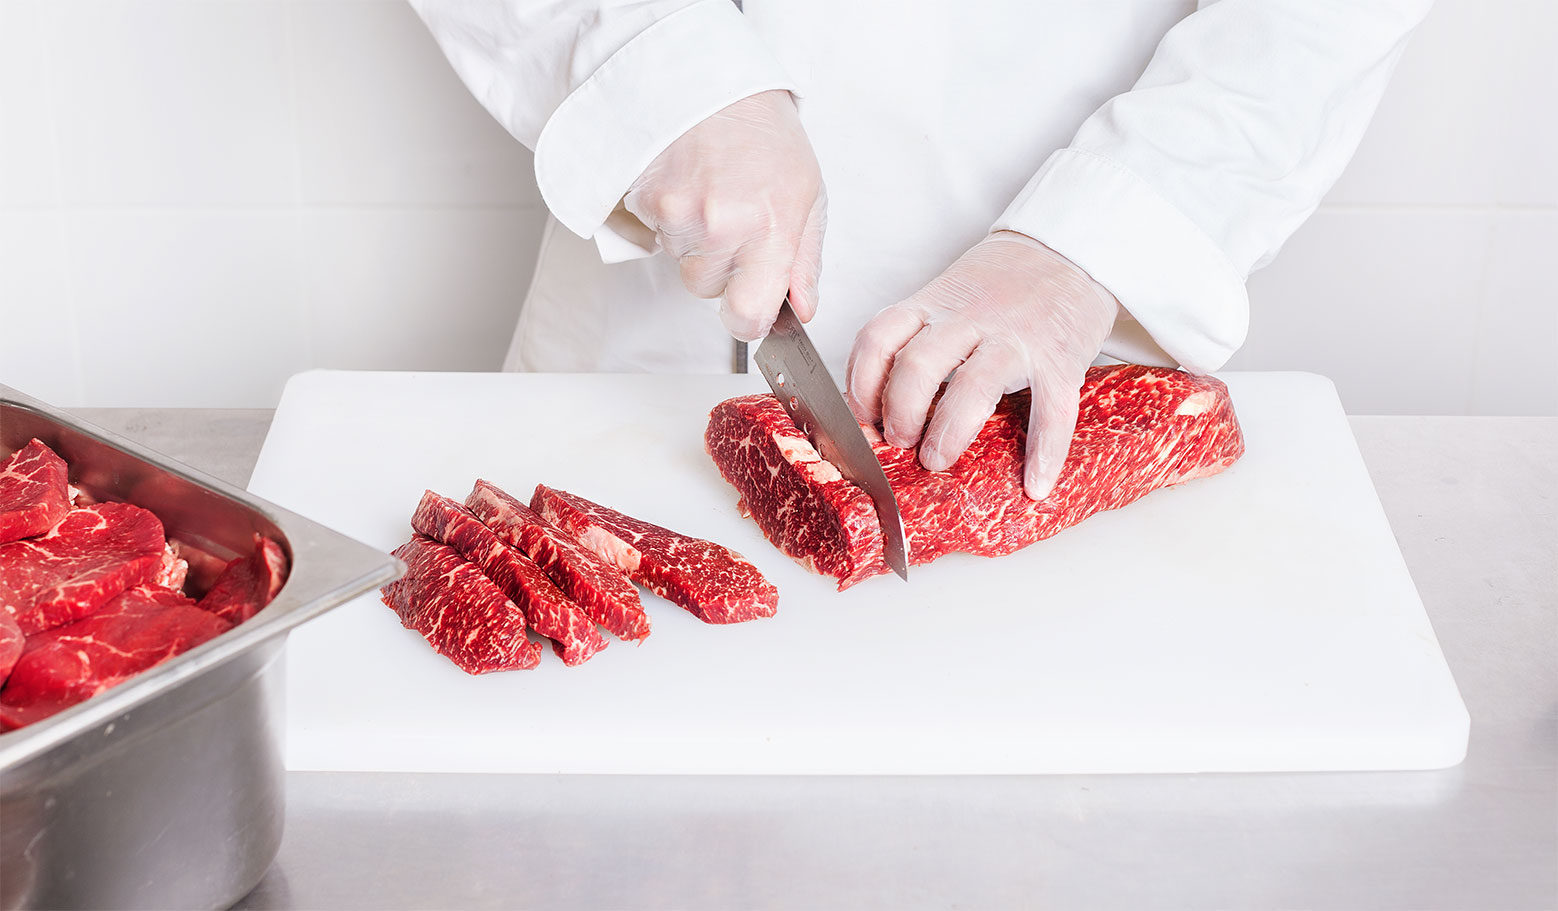 Meat cutting. Промышленная нарезка мяса.